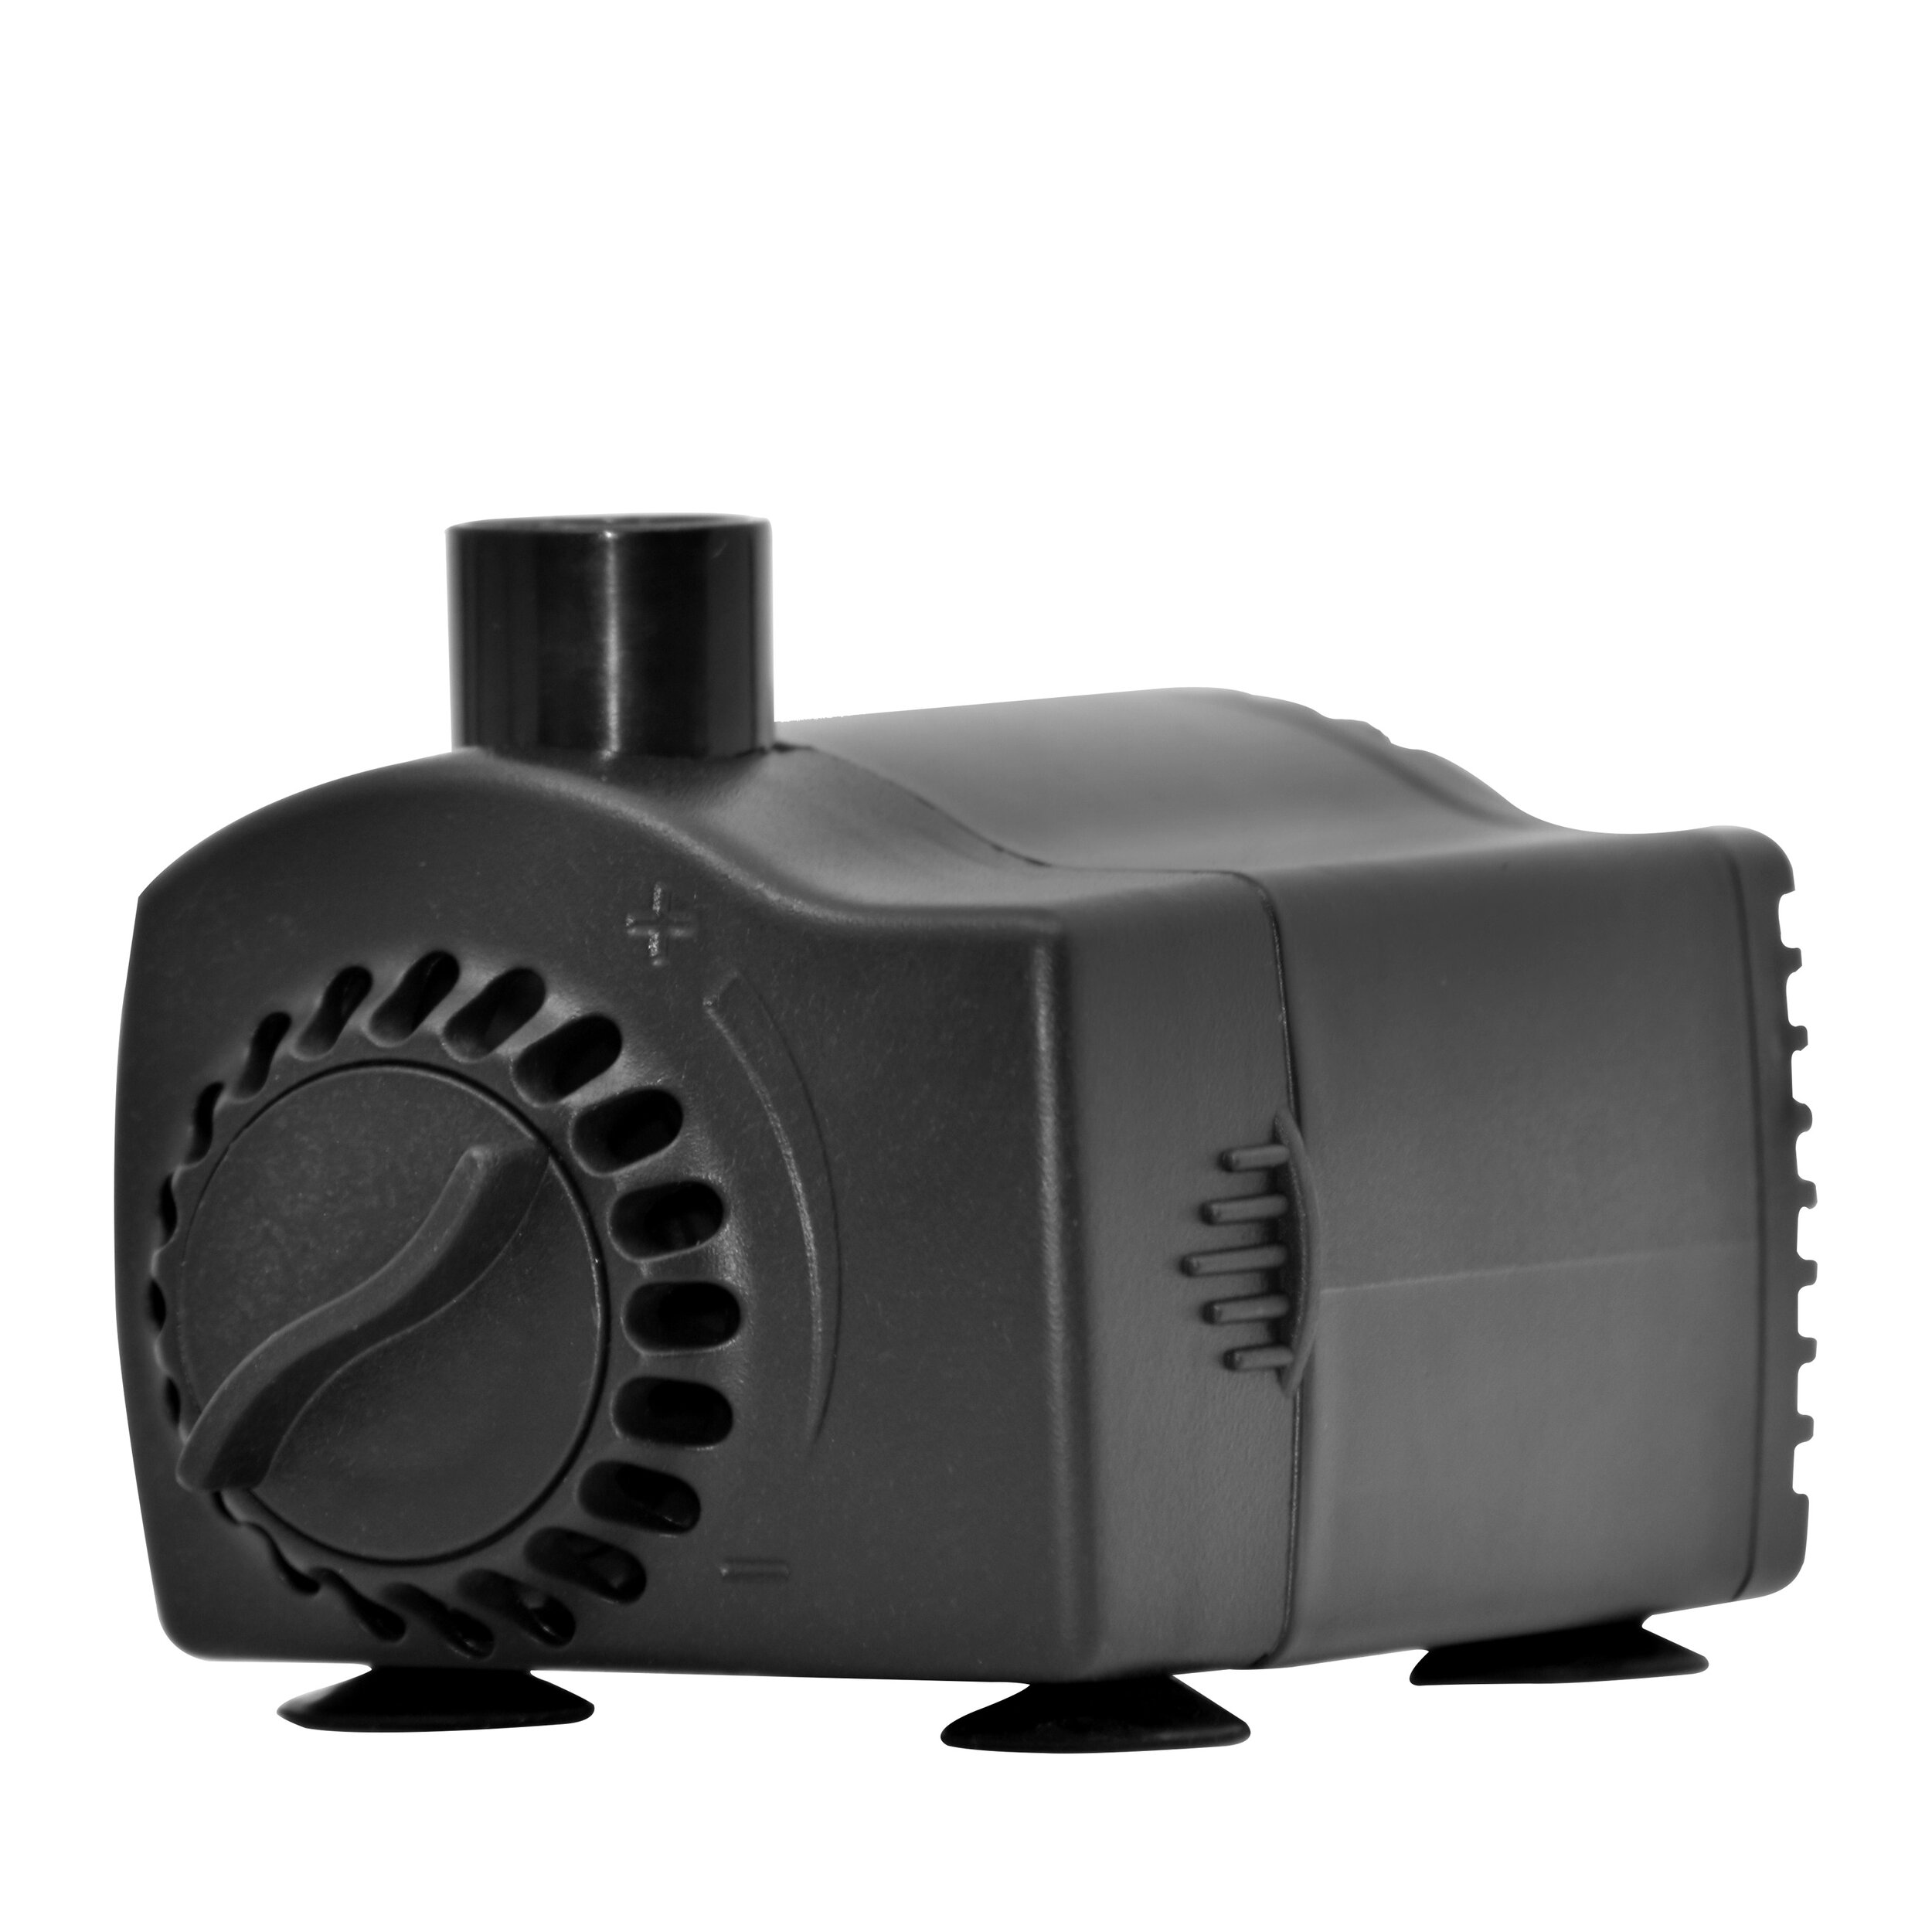 Smartpond Fountain Pump 50-80 GPH Model FP80 for sale online 